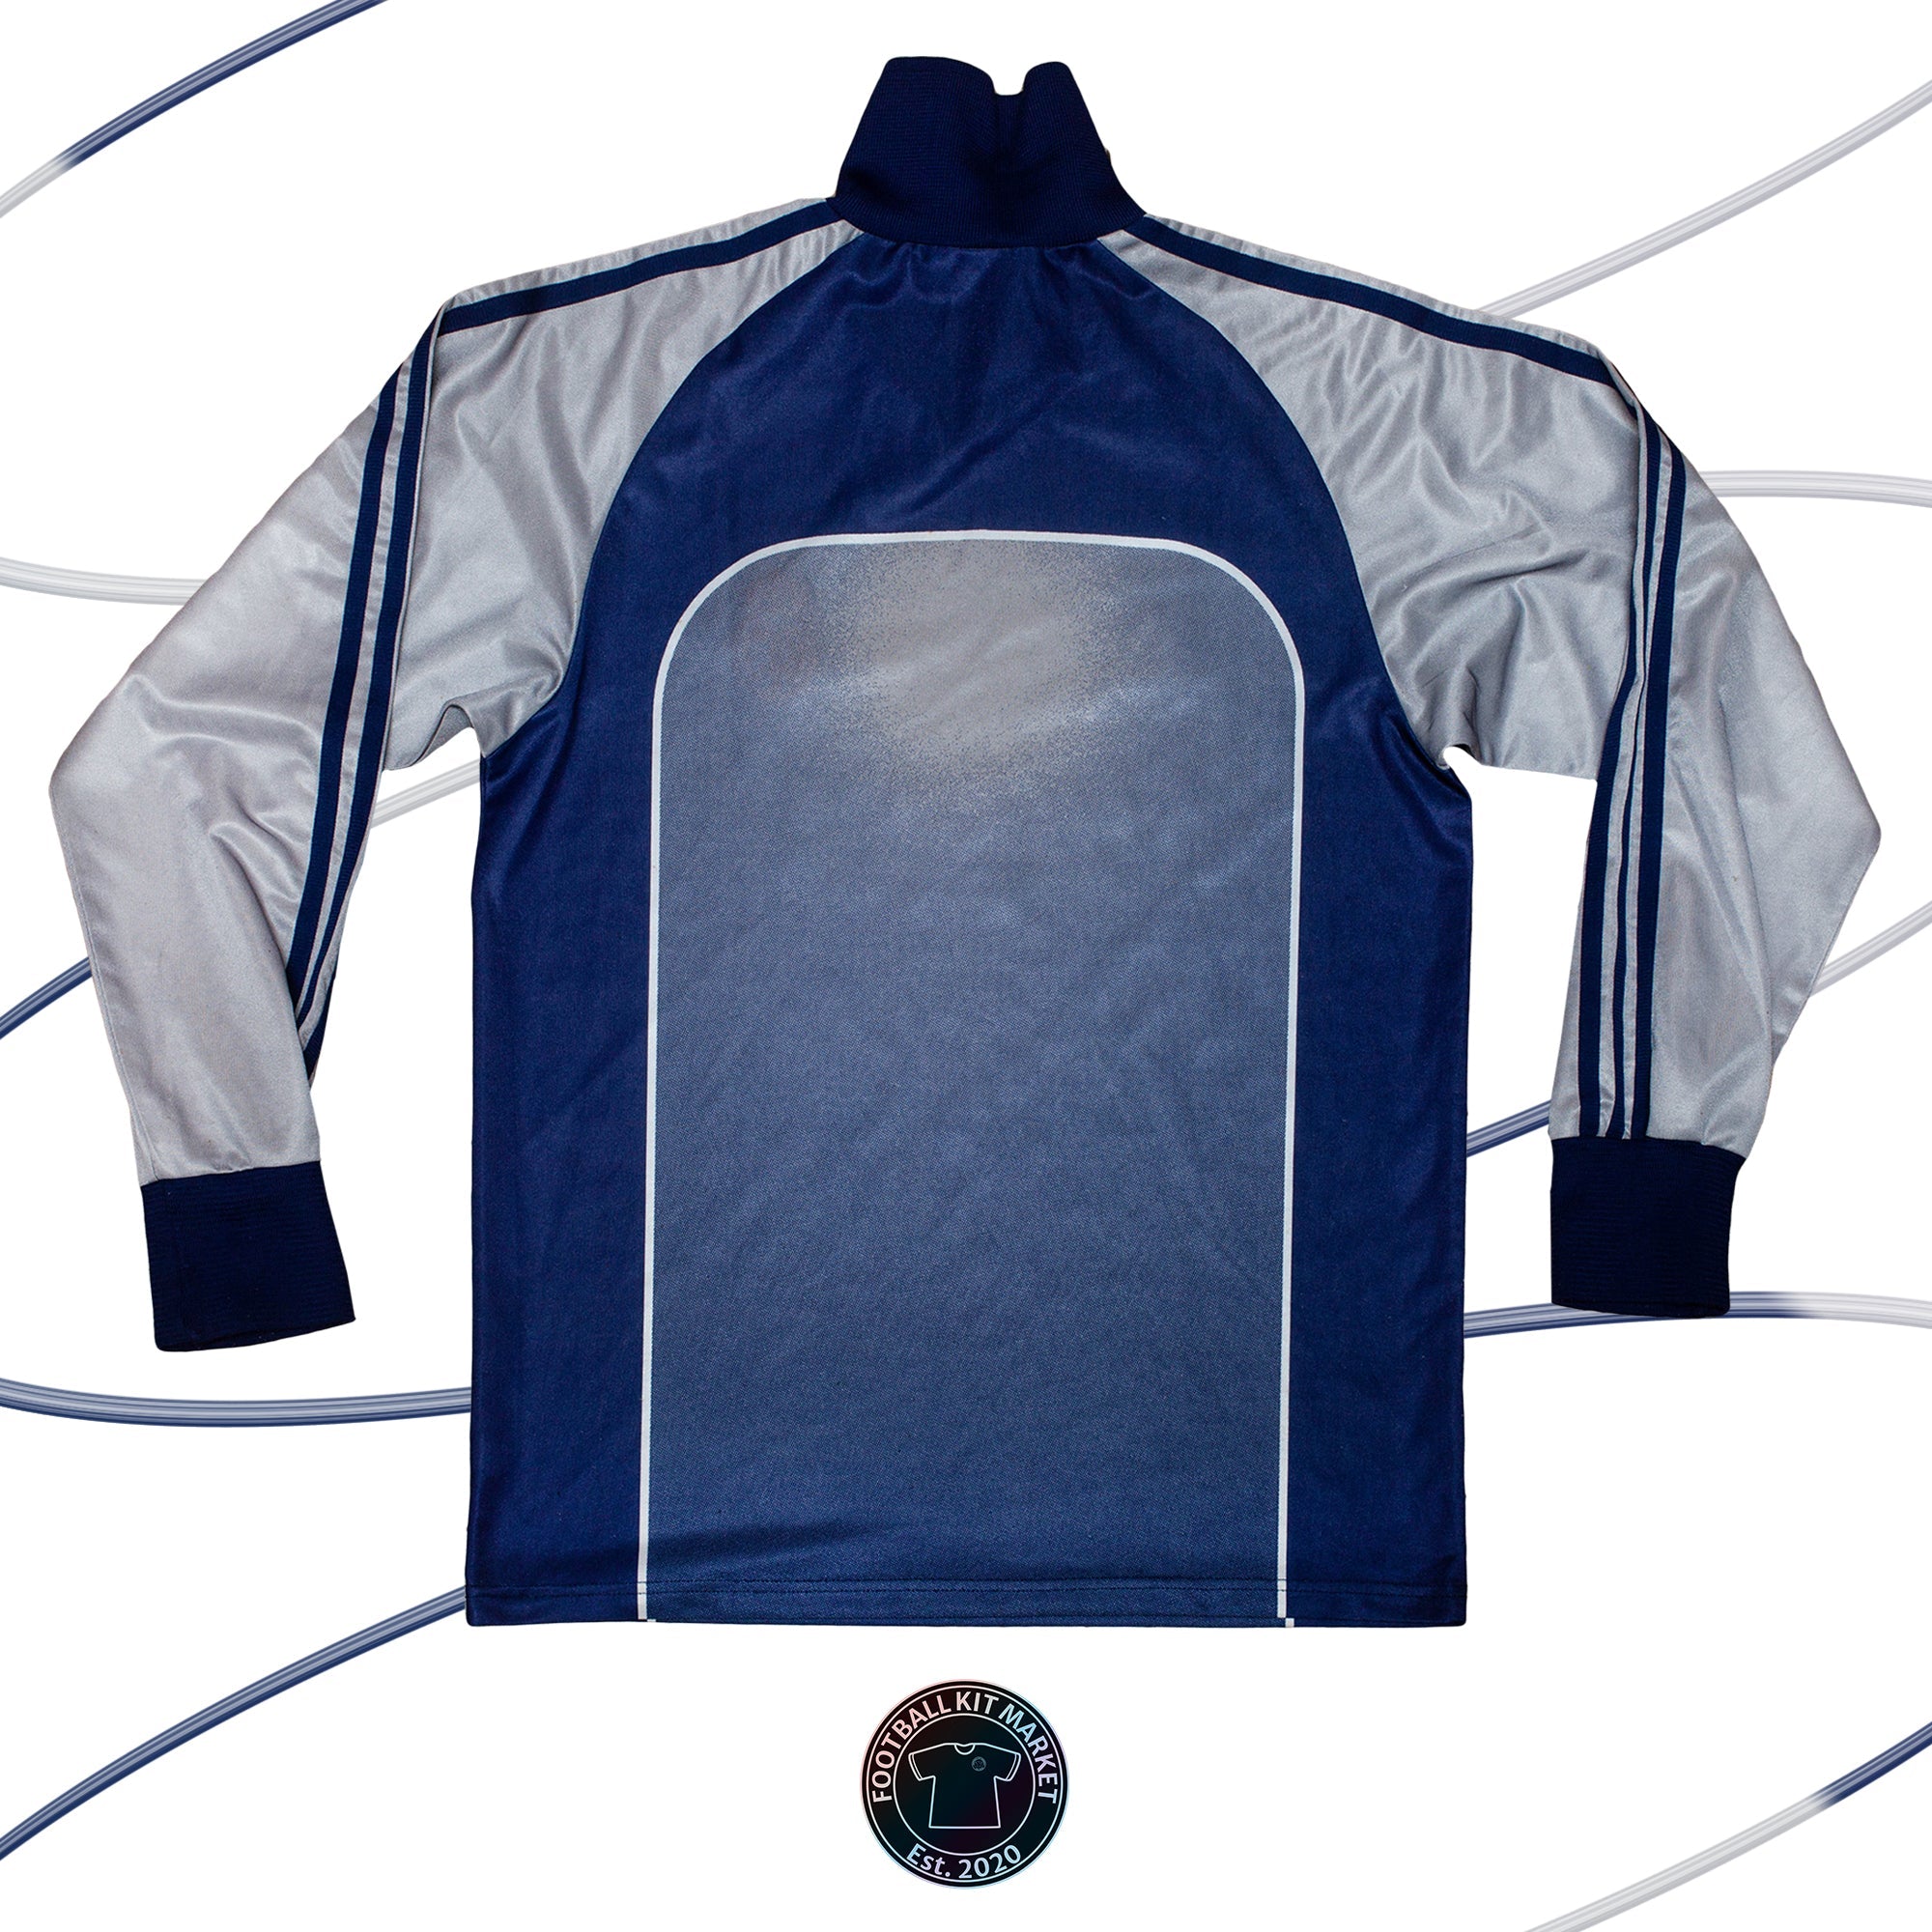 Genuine REAL MADRID Goalkeeper Shirt (2001-2002) - ADIDAS (M) - Product Image from Football Kit Market